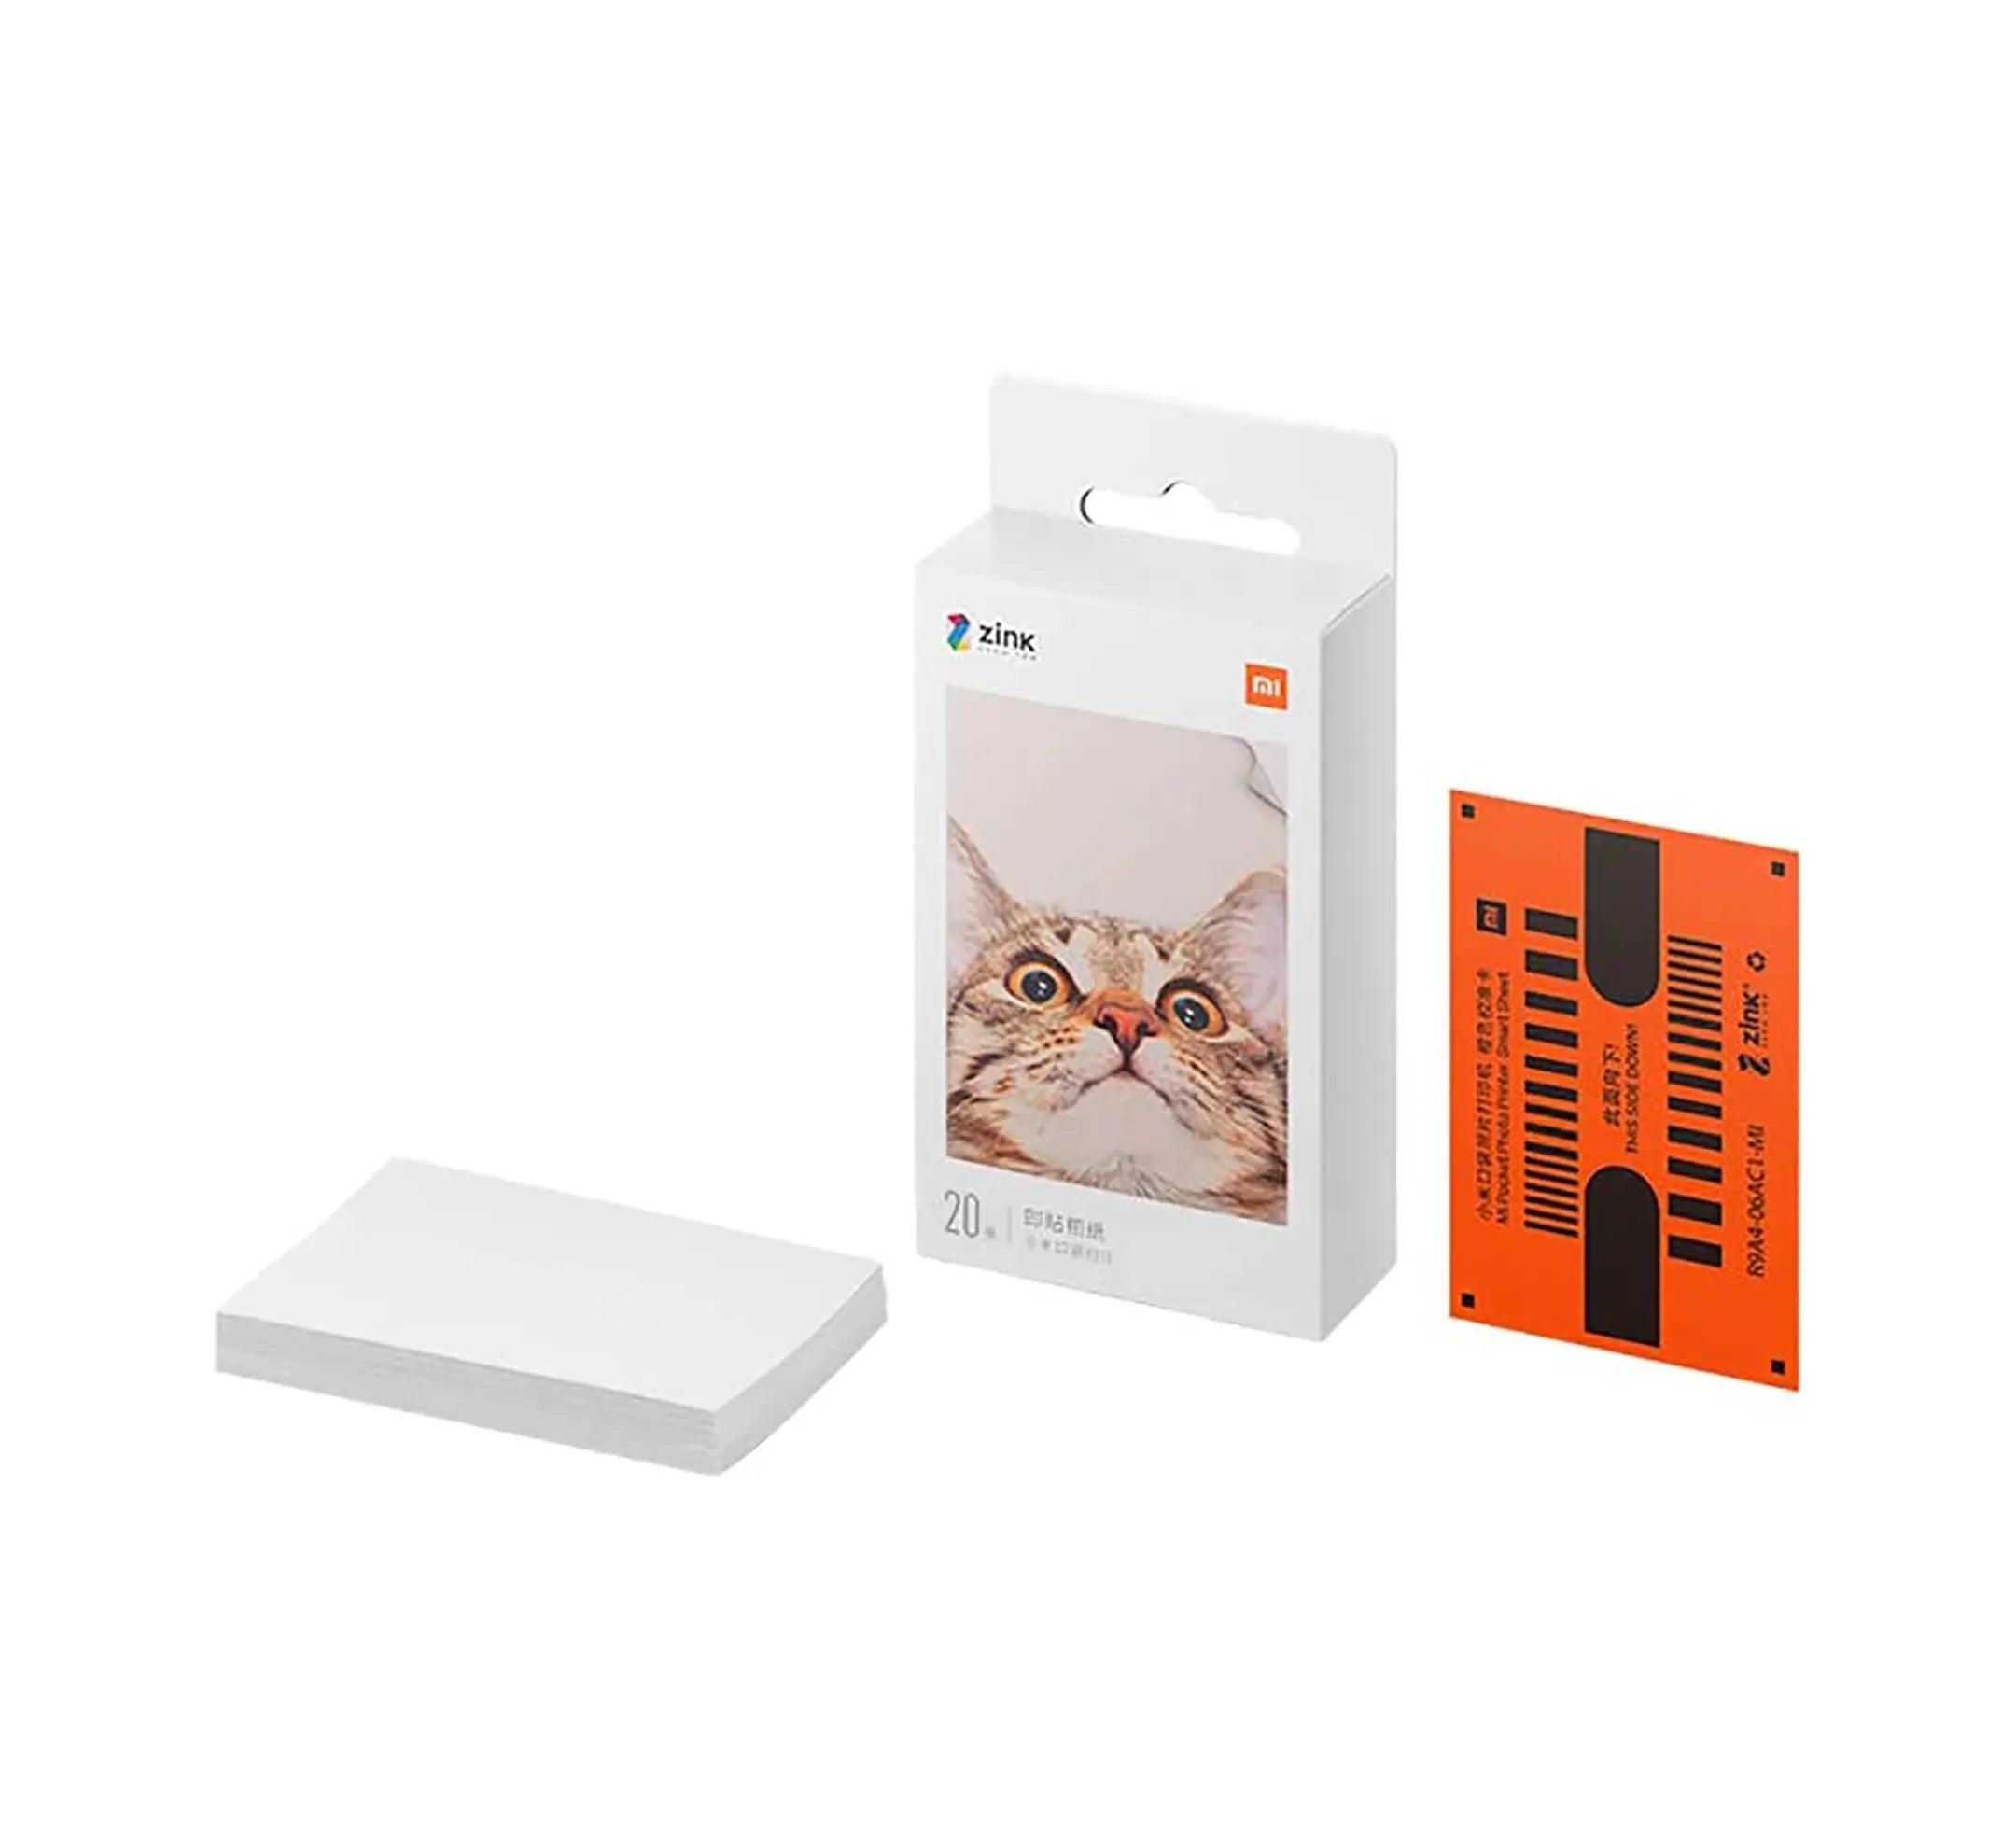 Mi Portable Photo Printer Paper (2x3-inch, 20-sheets) - Brightex Retail UK